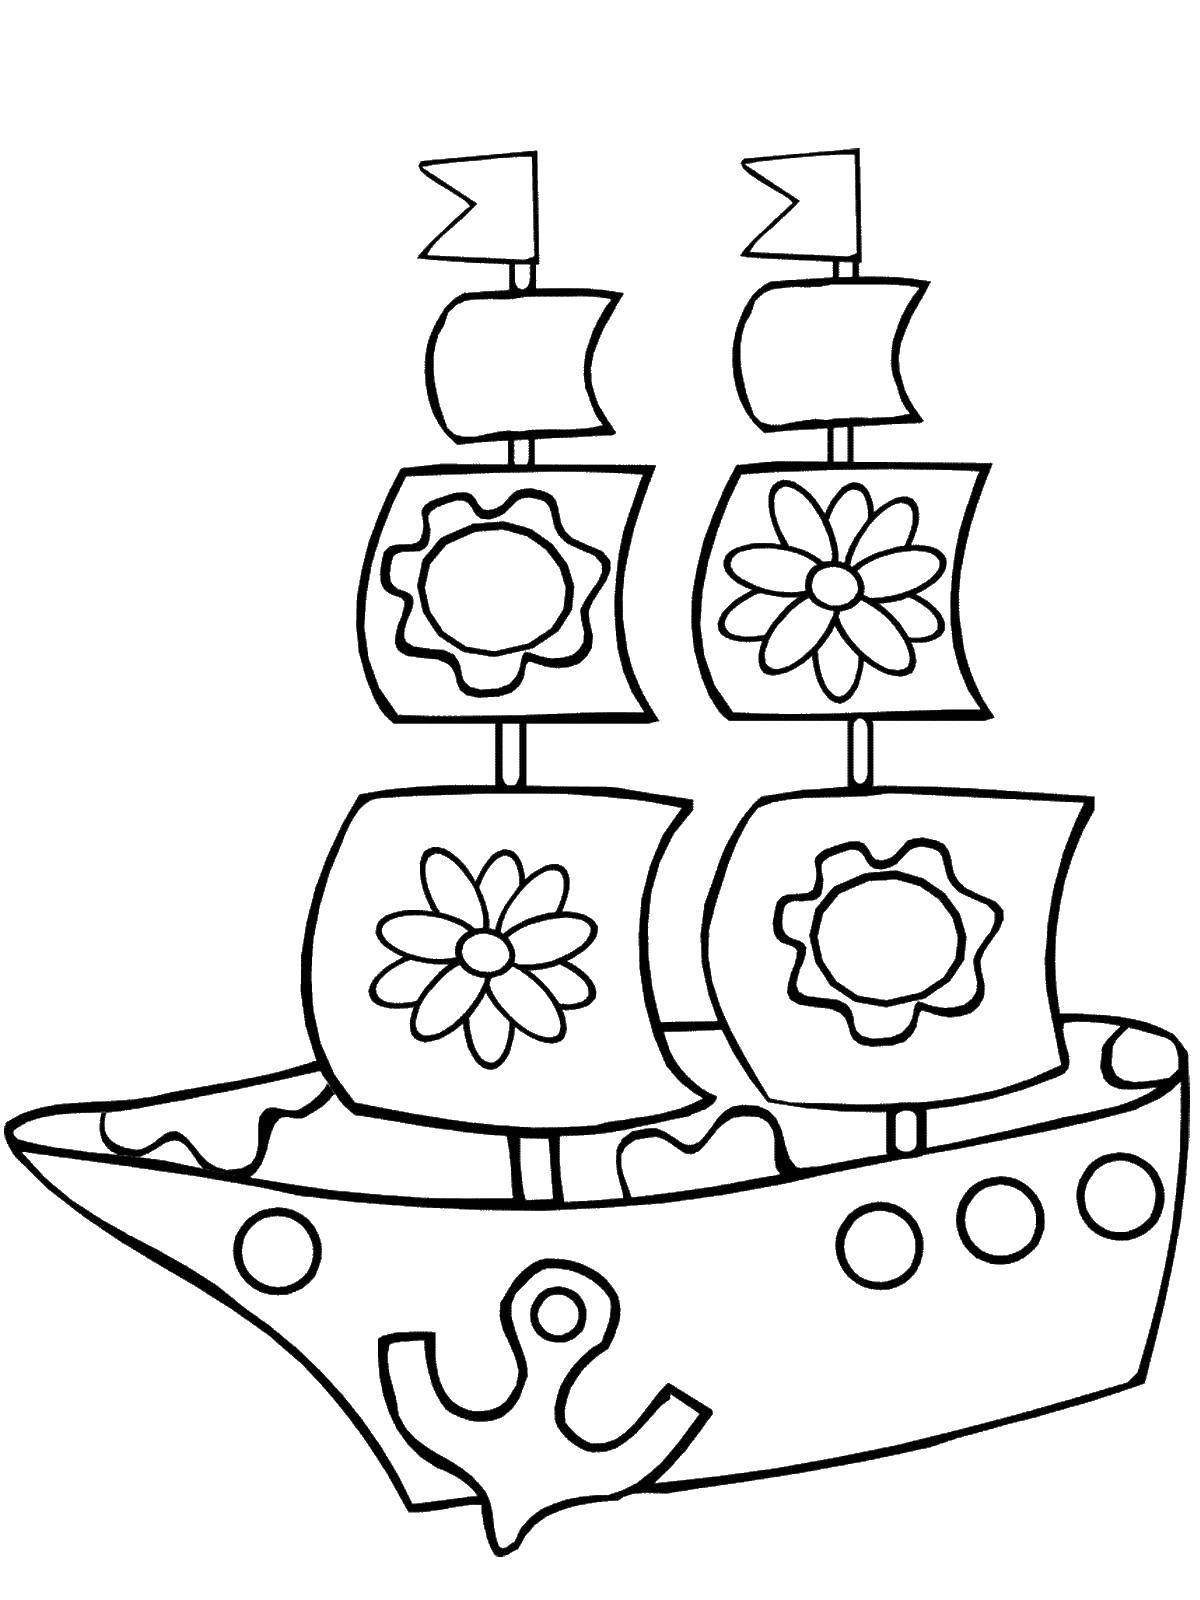 Ship in flowers